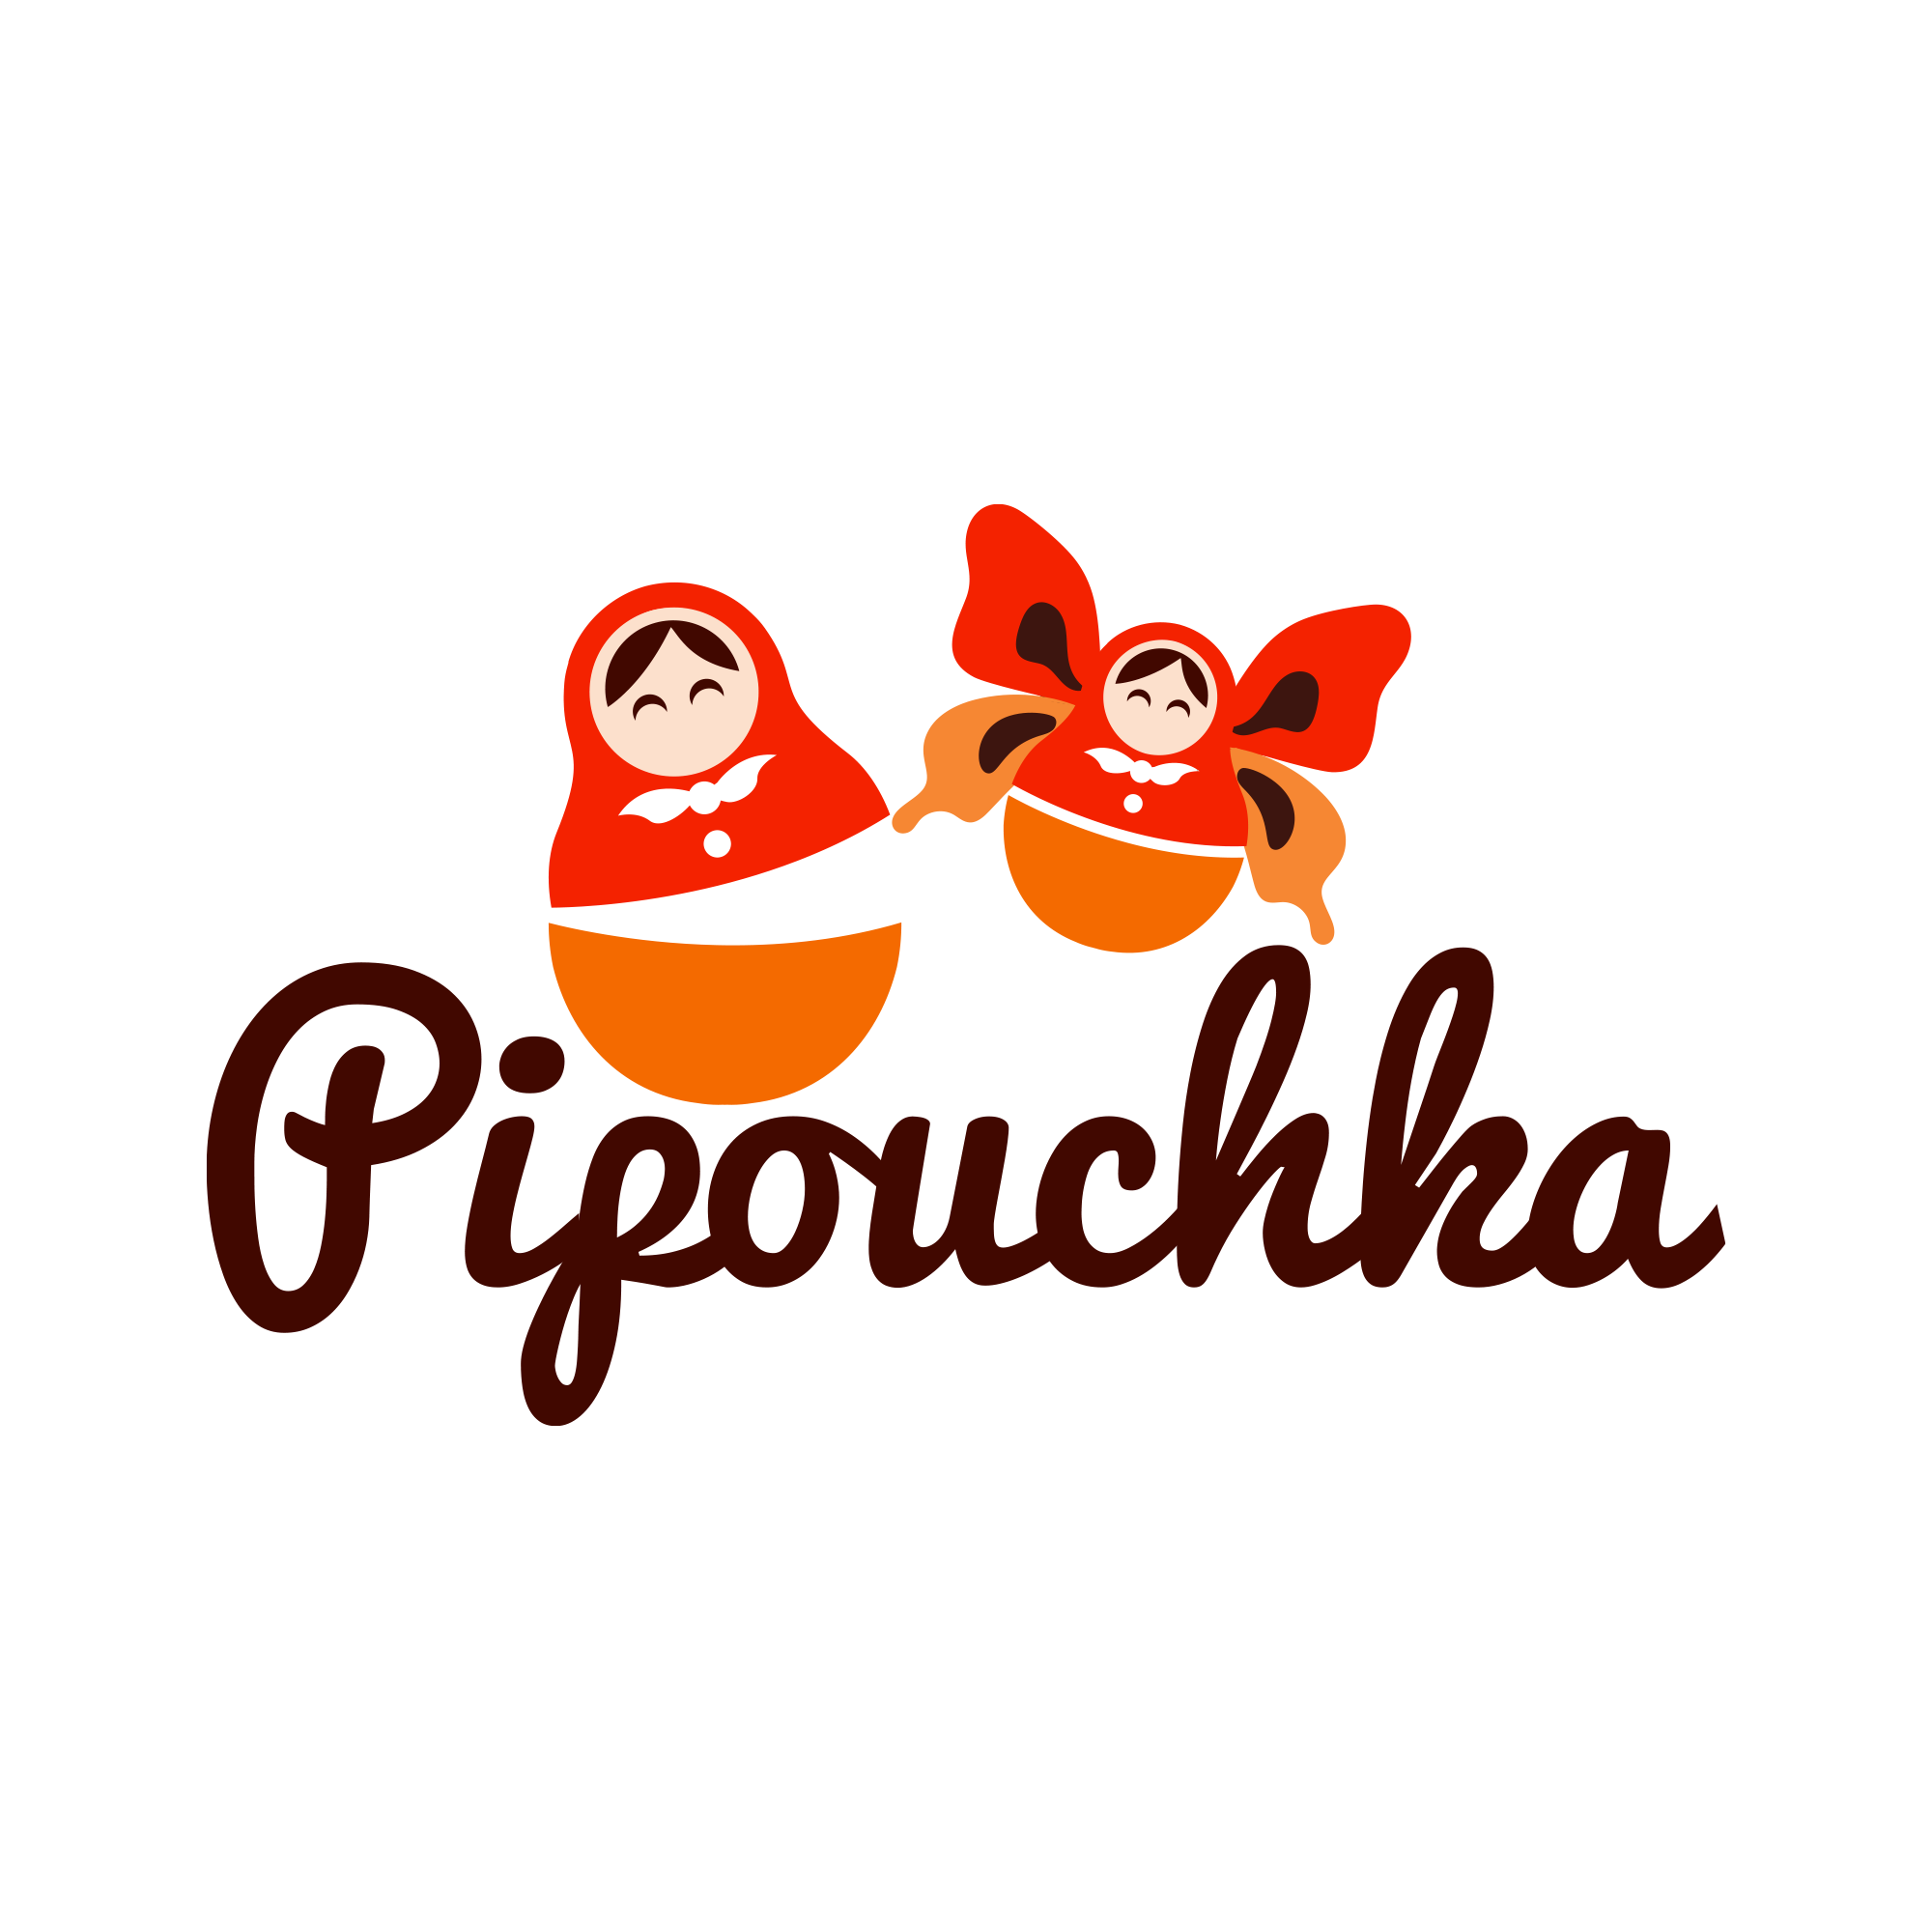 Pipouchka 